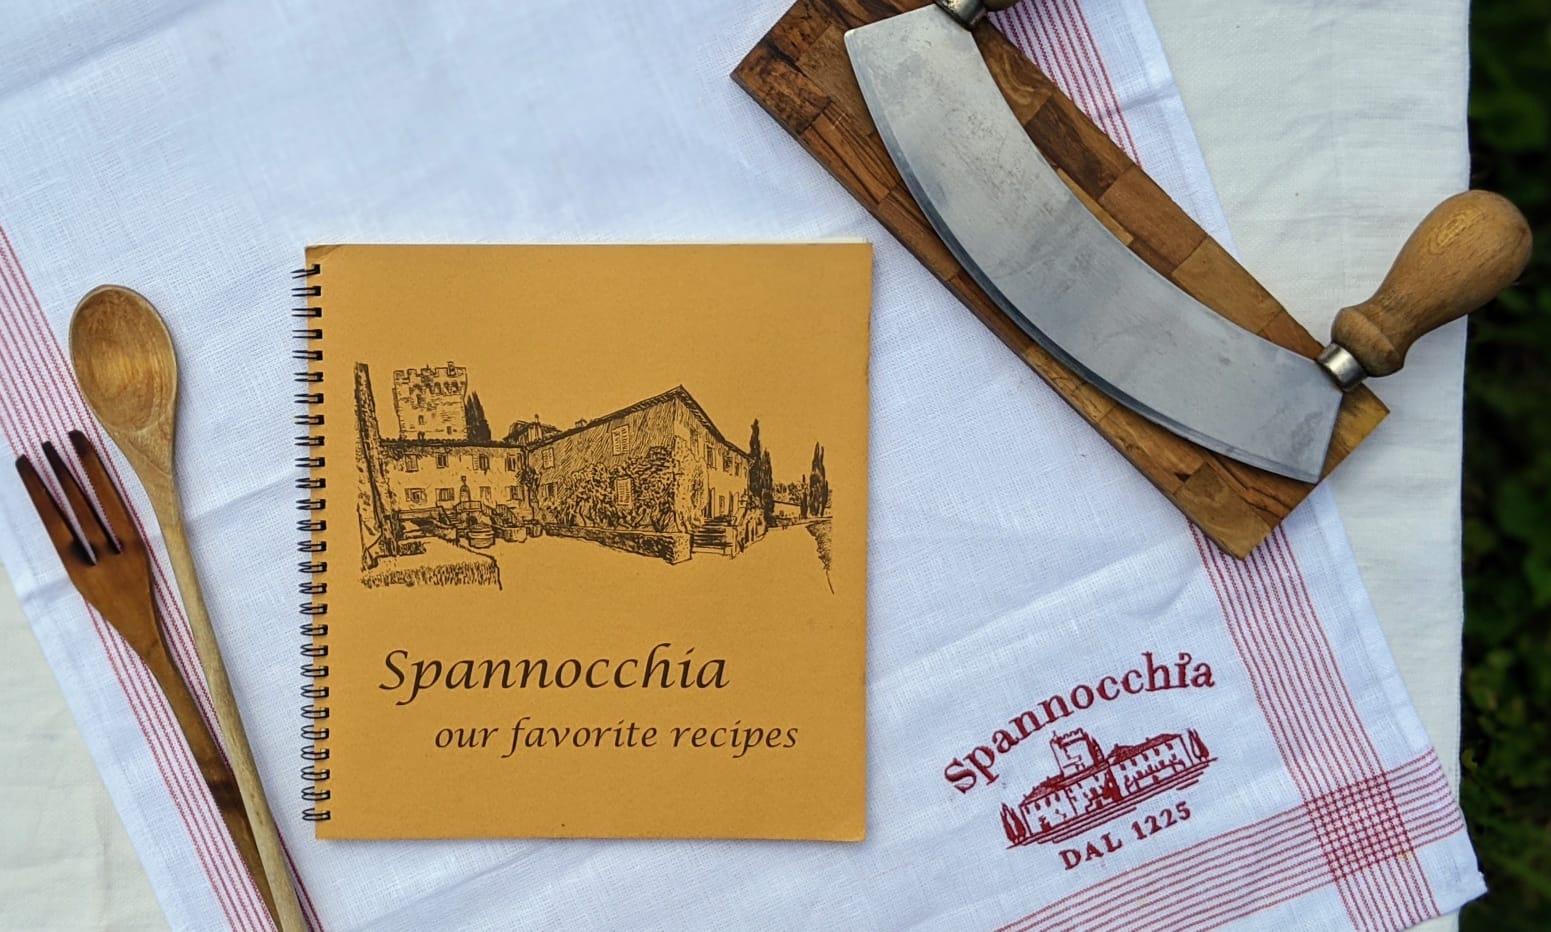 "Spannocchia, our favorite recipes" book cover, with mezzaluna, wooden utensils, and Spannocchia linen towel